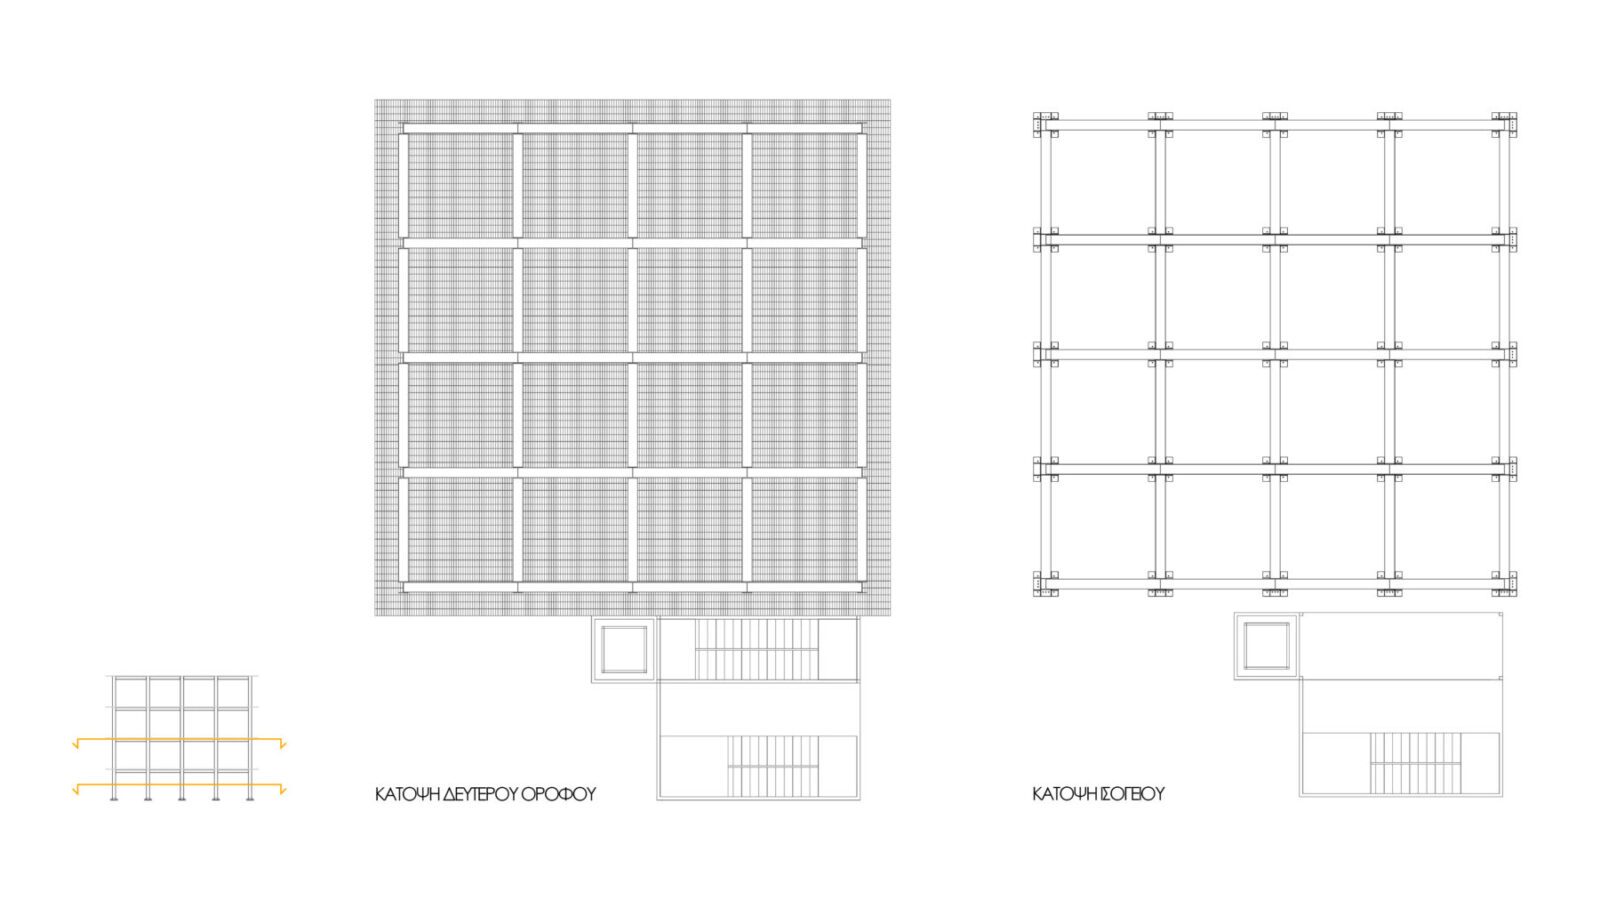 Archisearch Para-city-c Pods | Diploma thesis project by Alexandra Mitsakaki